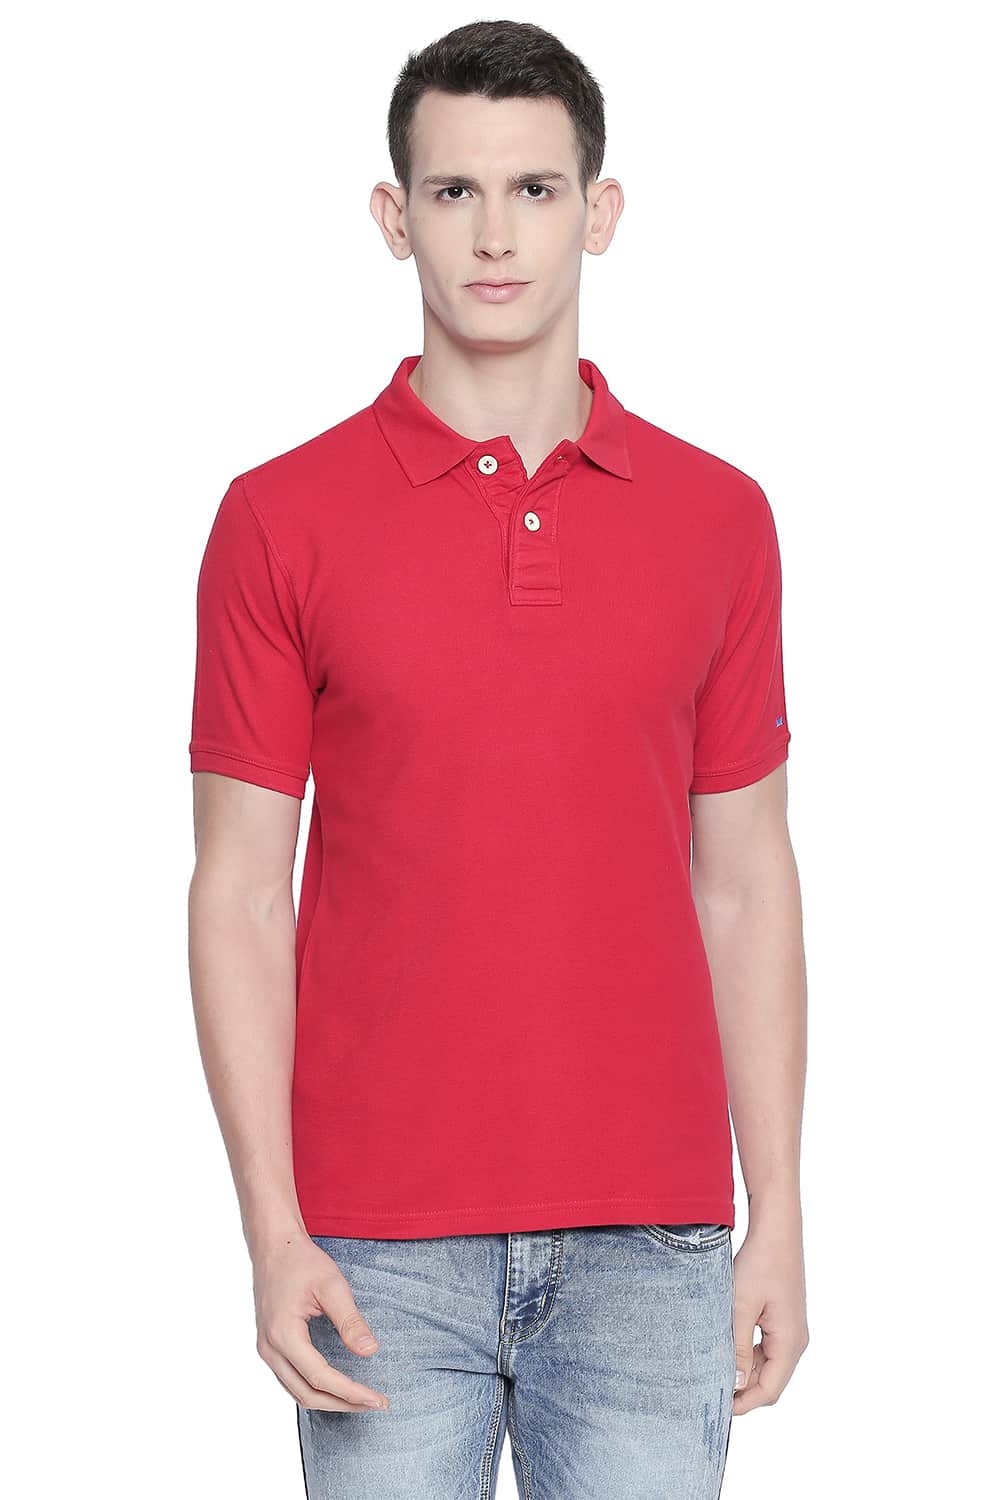 BASICS | Basics Muscle Fit Red Piqu Polo T-Shirt